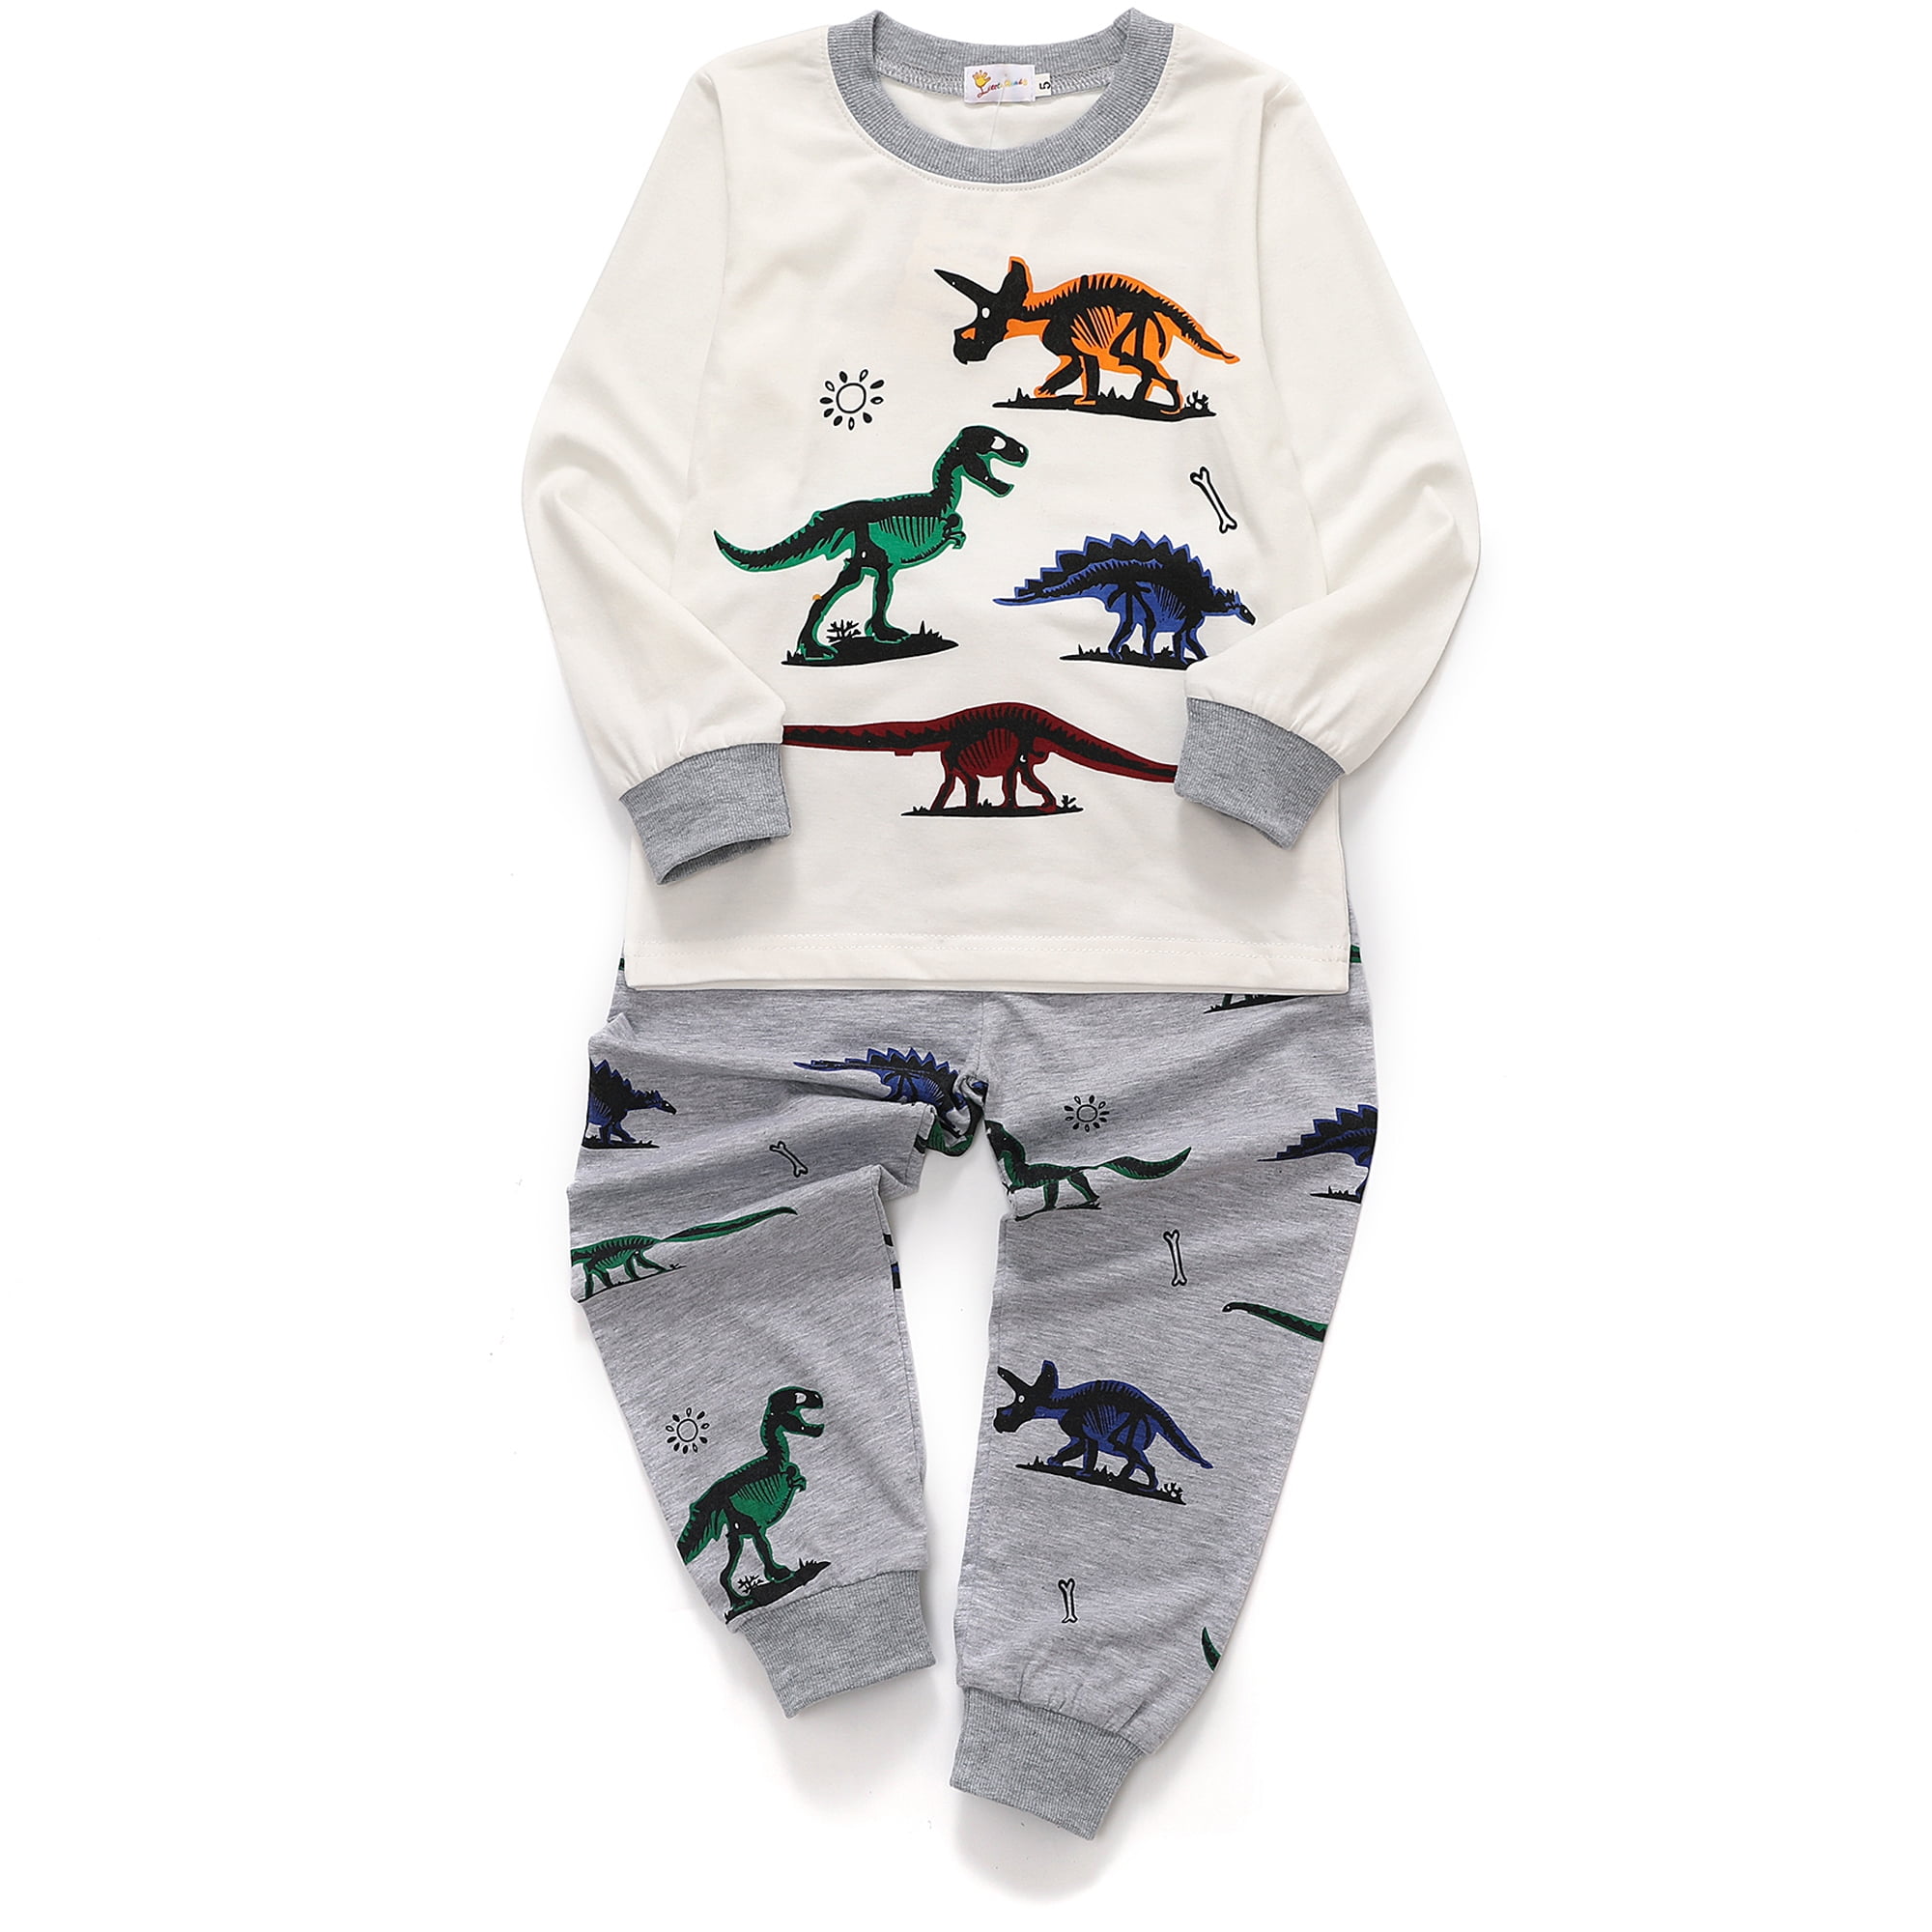 Little Hand Toddler Boy Dinosaur Long Sleeve Top & Long Pants 100% Cotton Pajama Set 7T